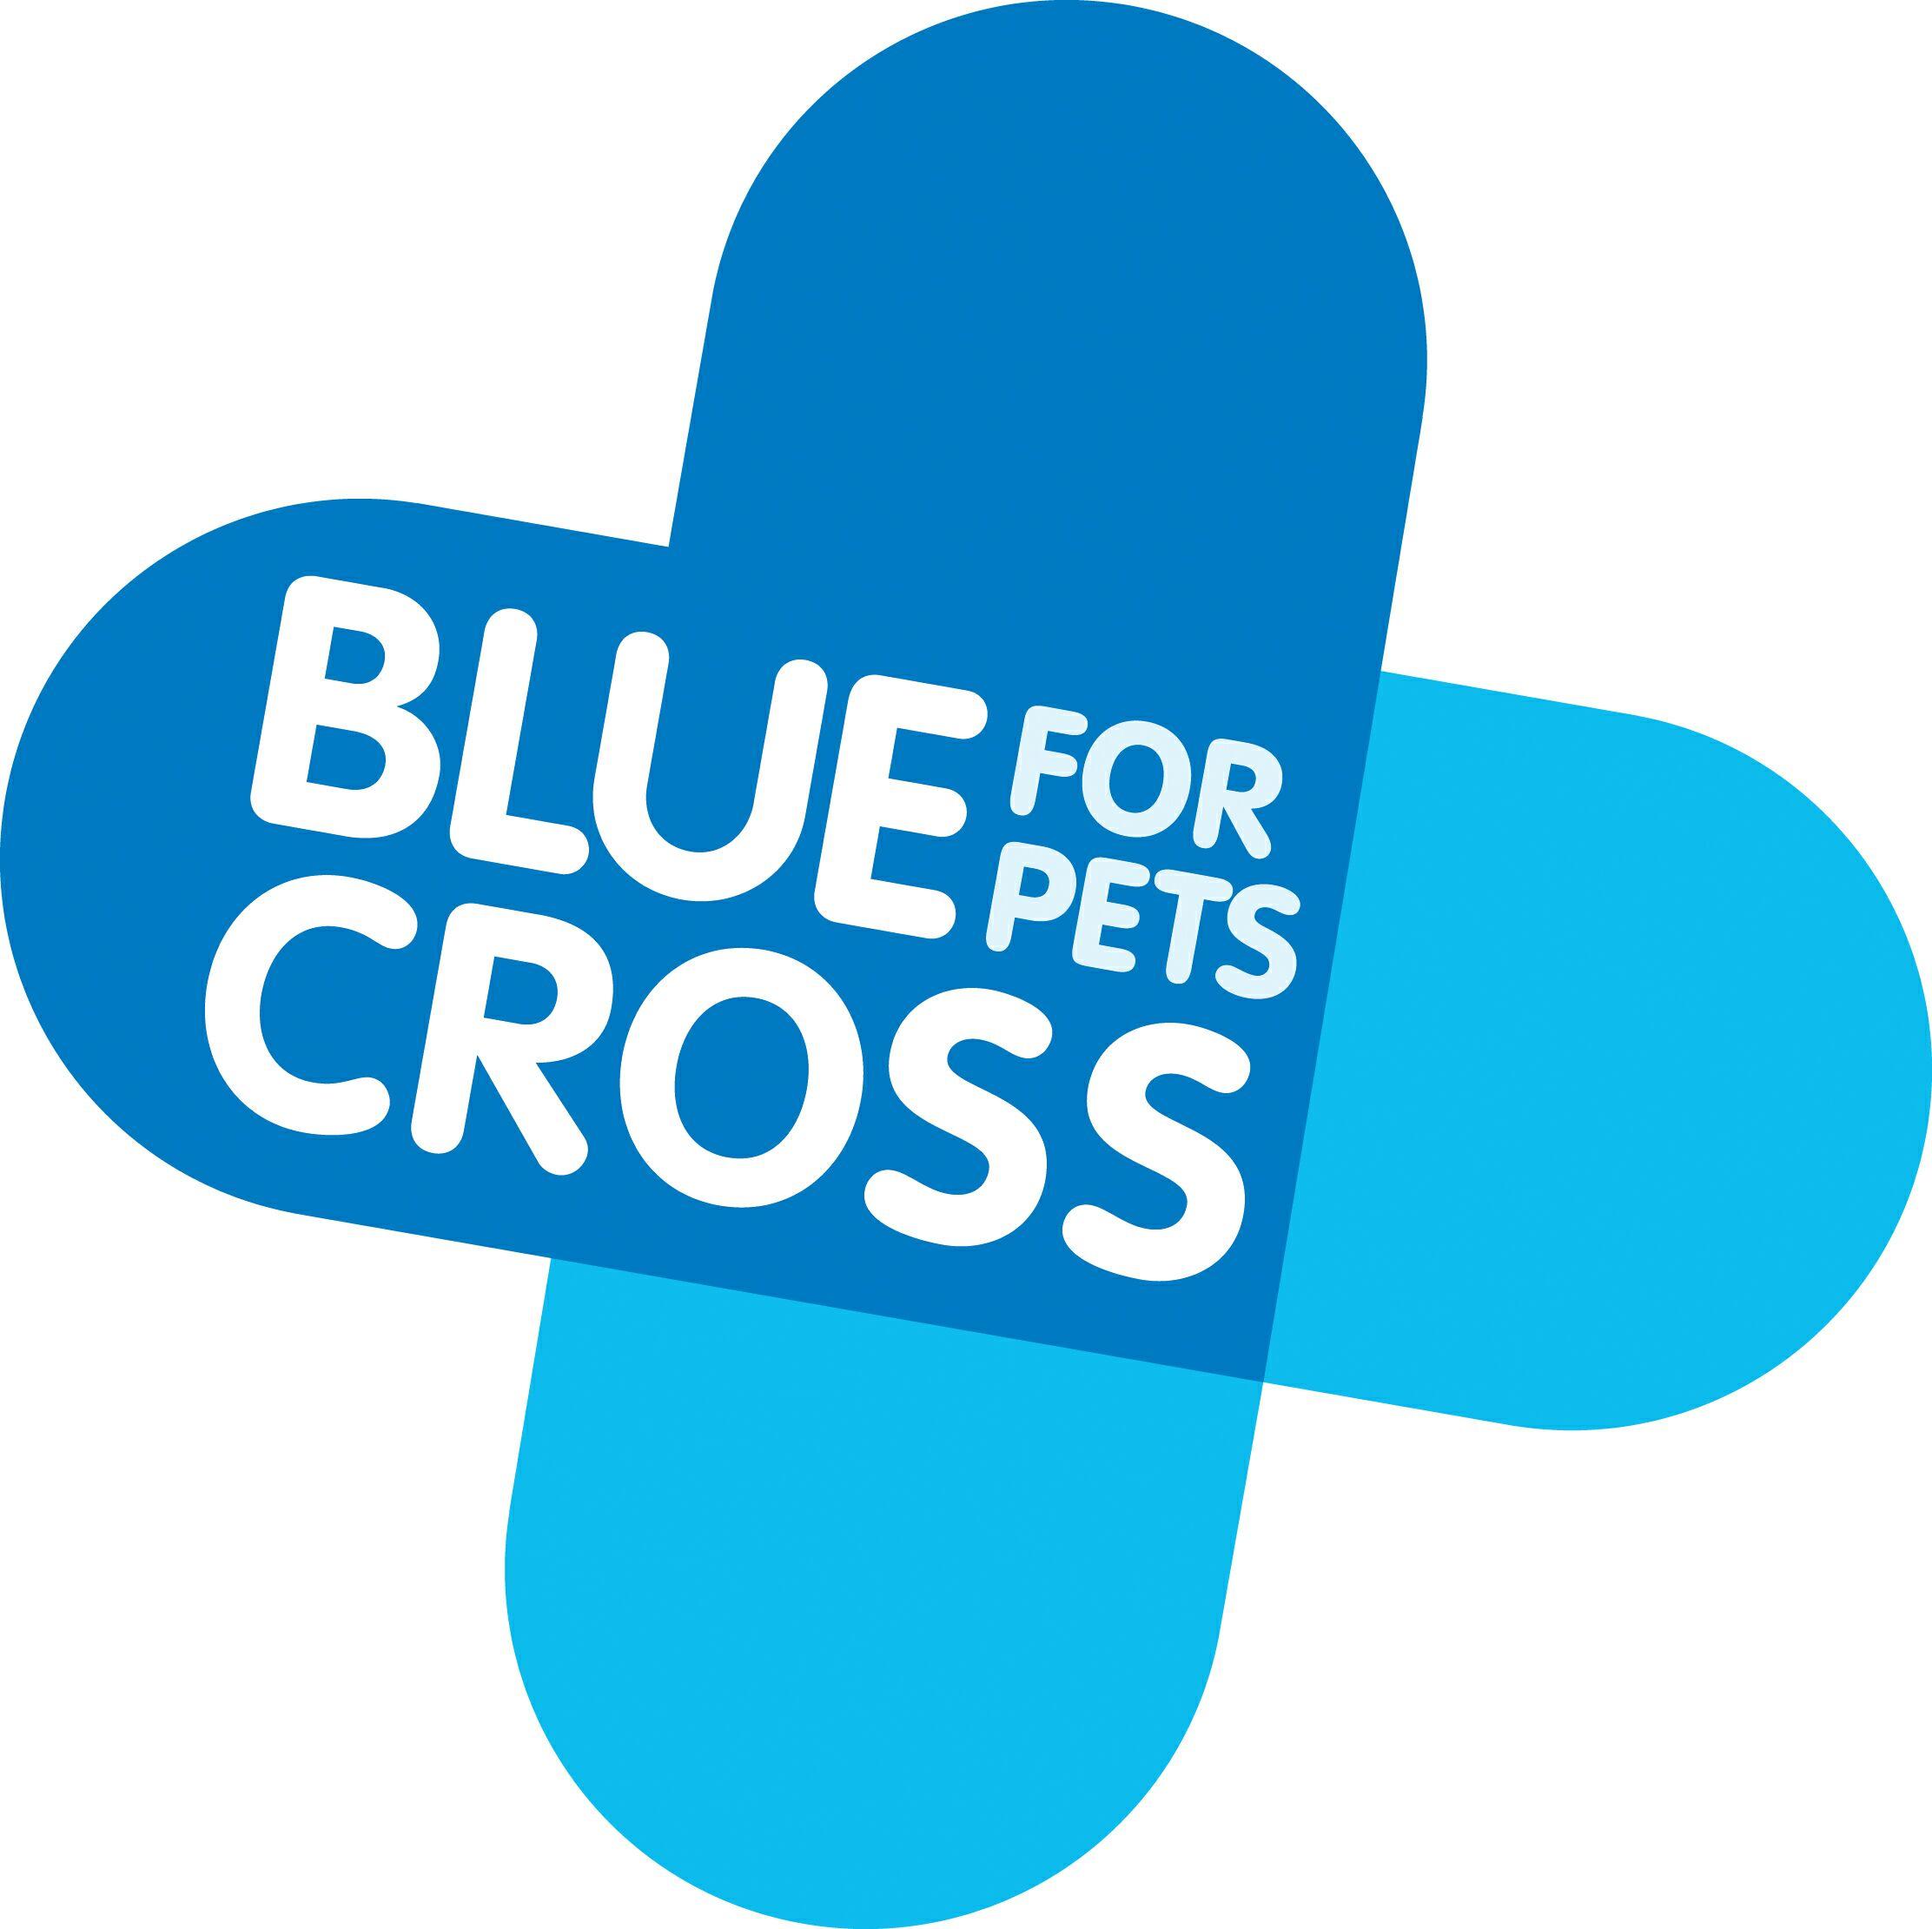 Blue Charity Logo - Blue Cross. The Big Give